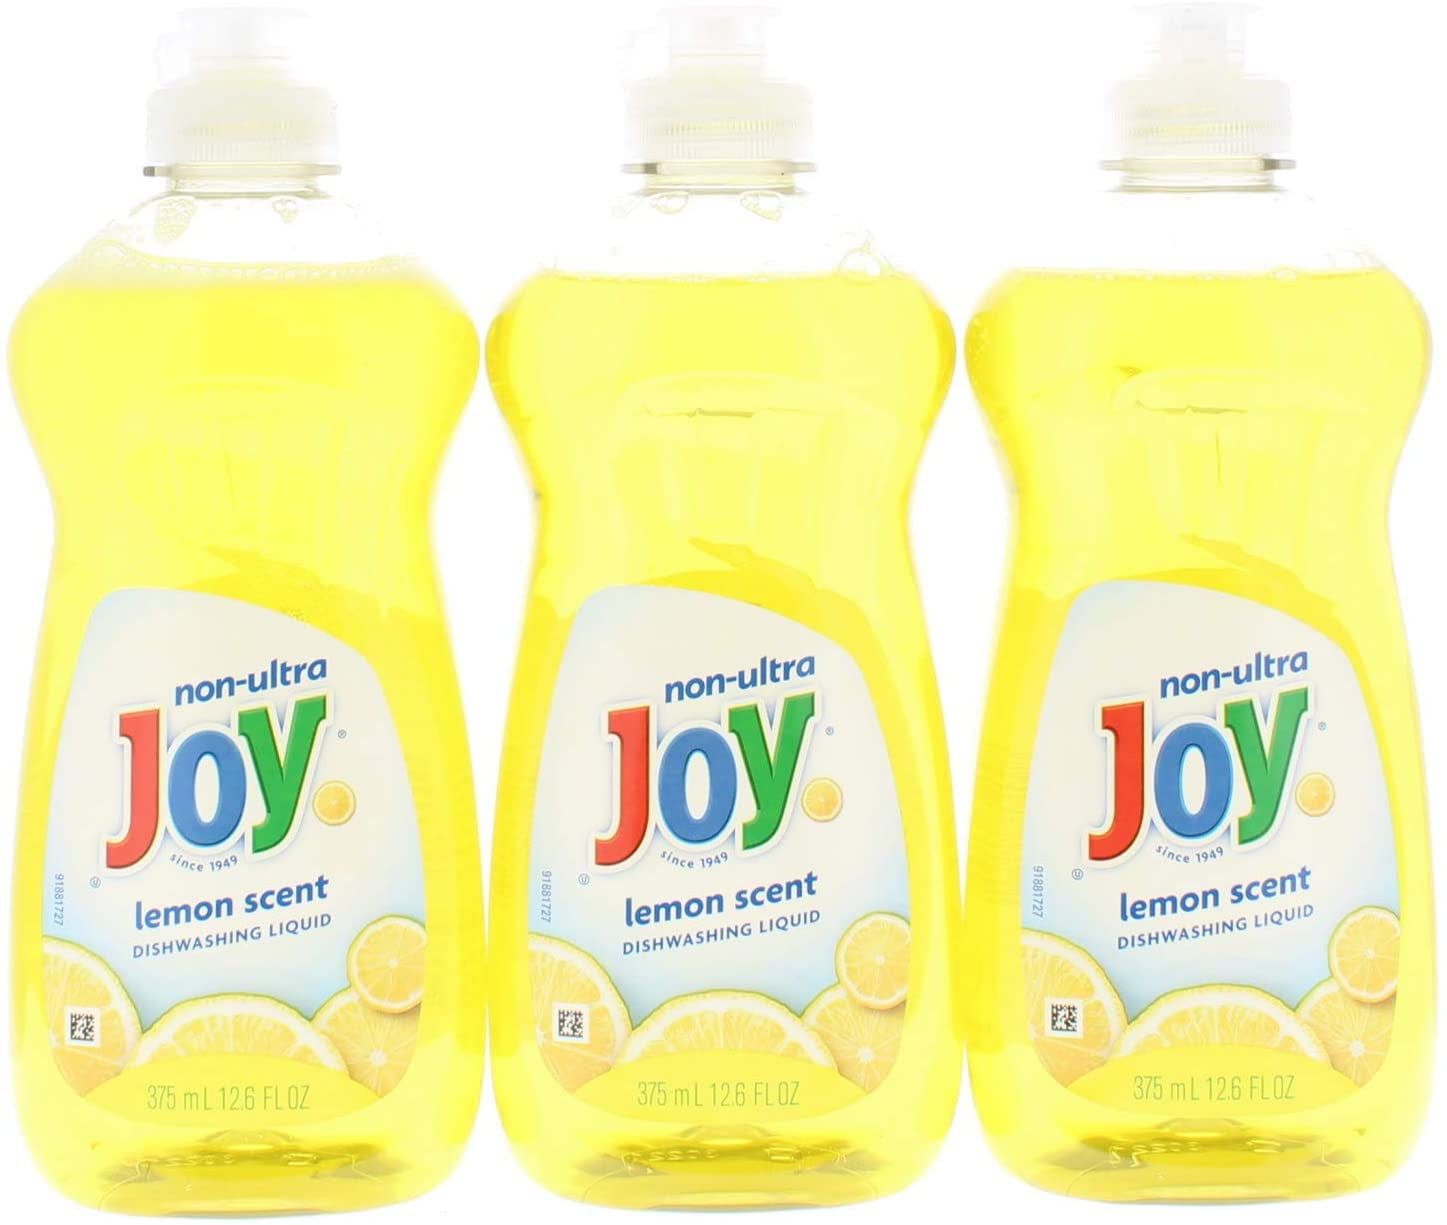 Cute Dishwashing Supplies that Spark Joy